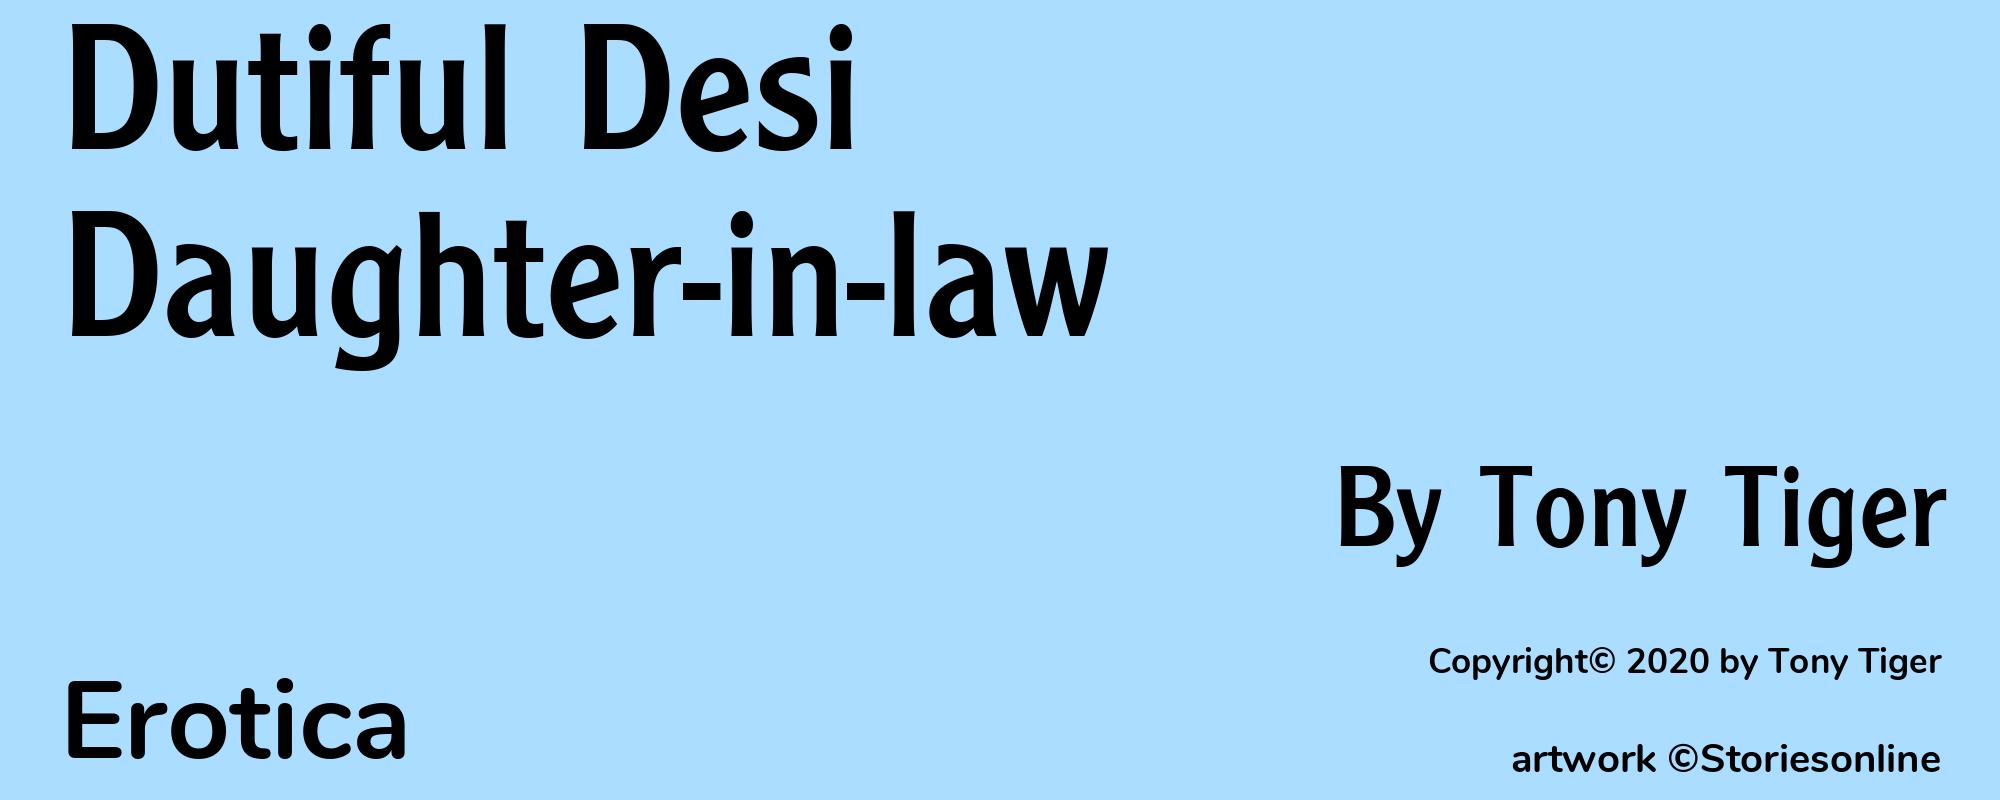 Dutiful Desi Daughter-in-law - Cover